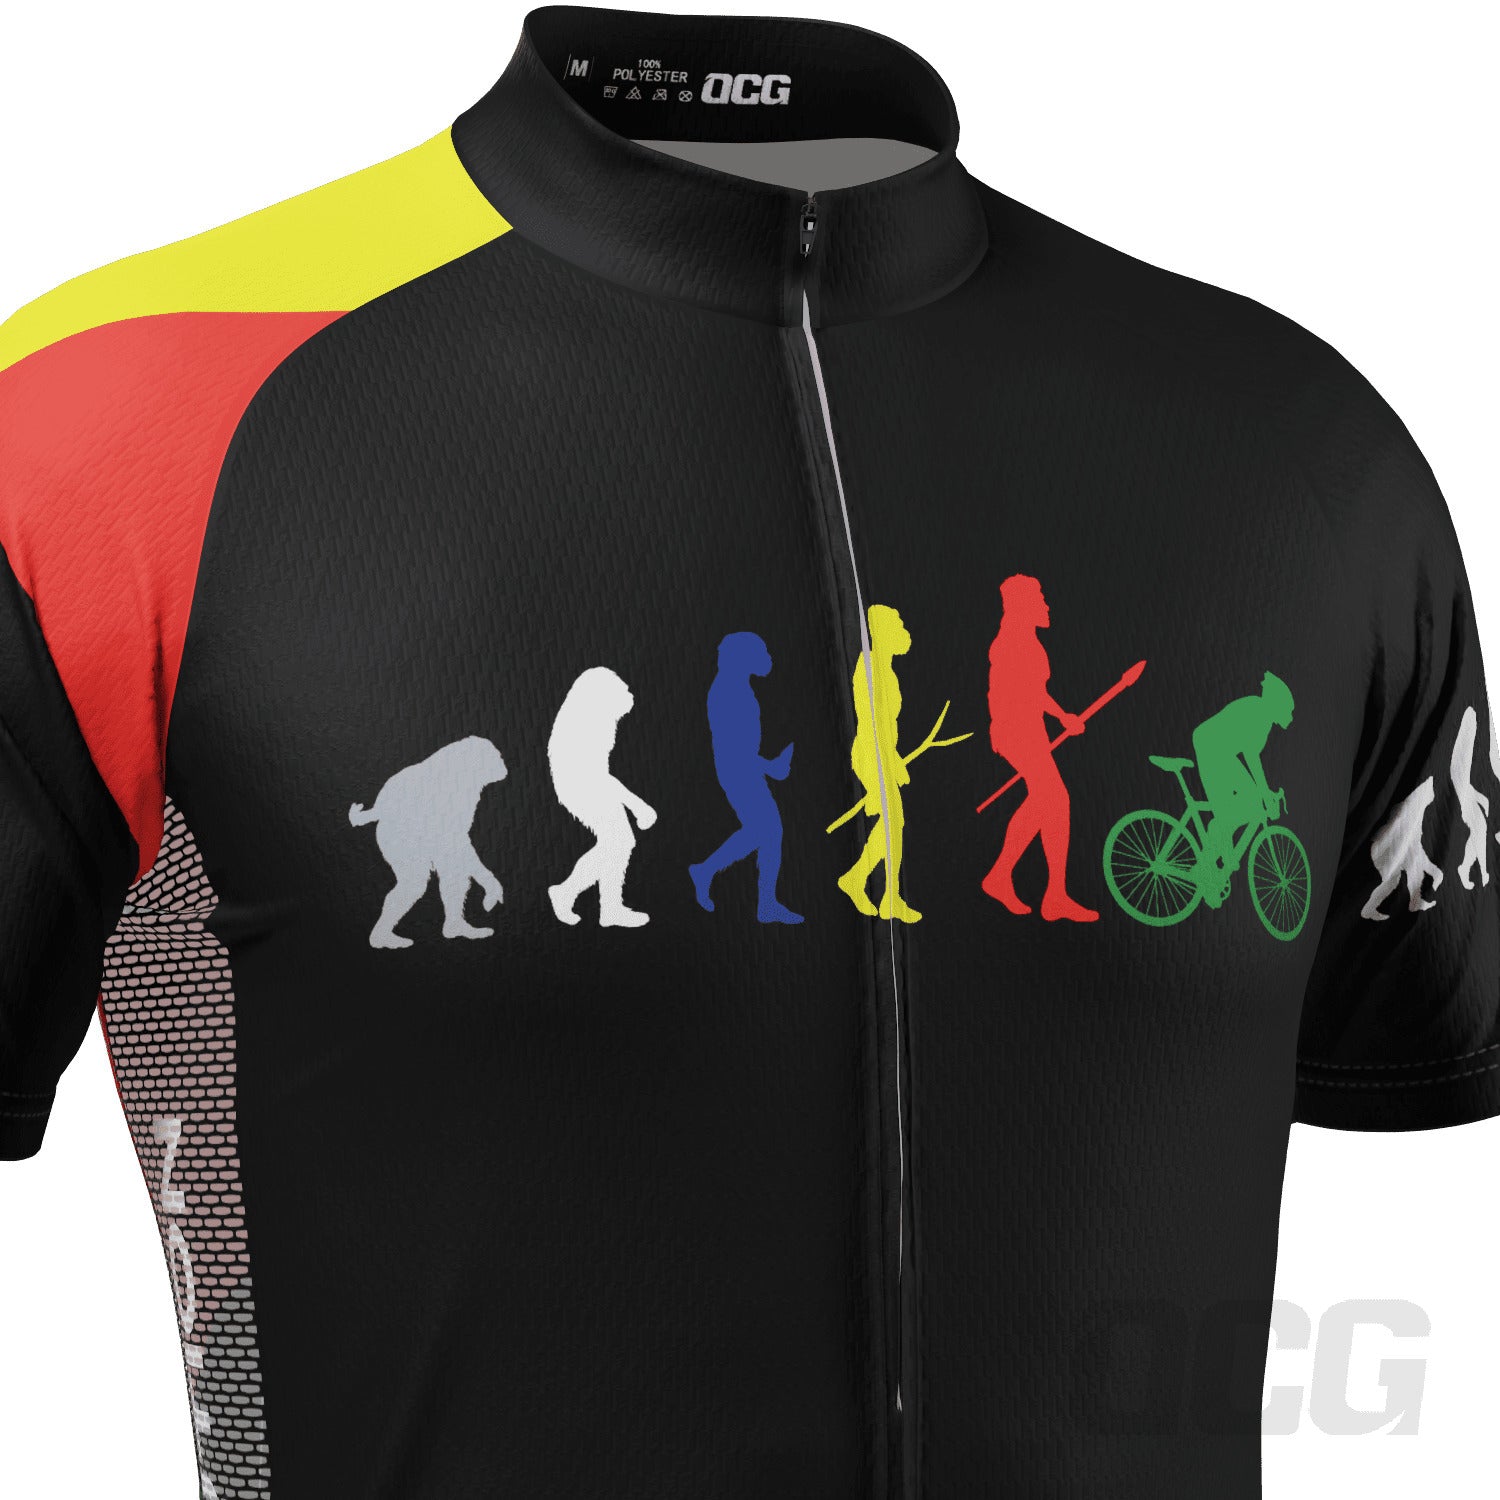 Men's Evolution of Man Short Sleeve Cycling Jersey